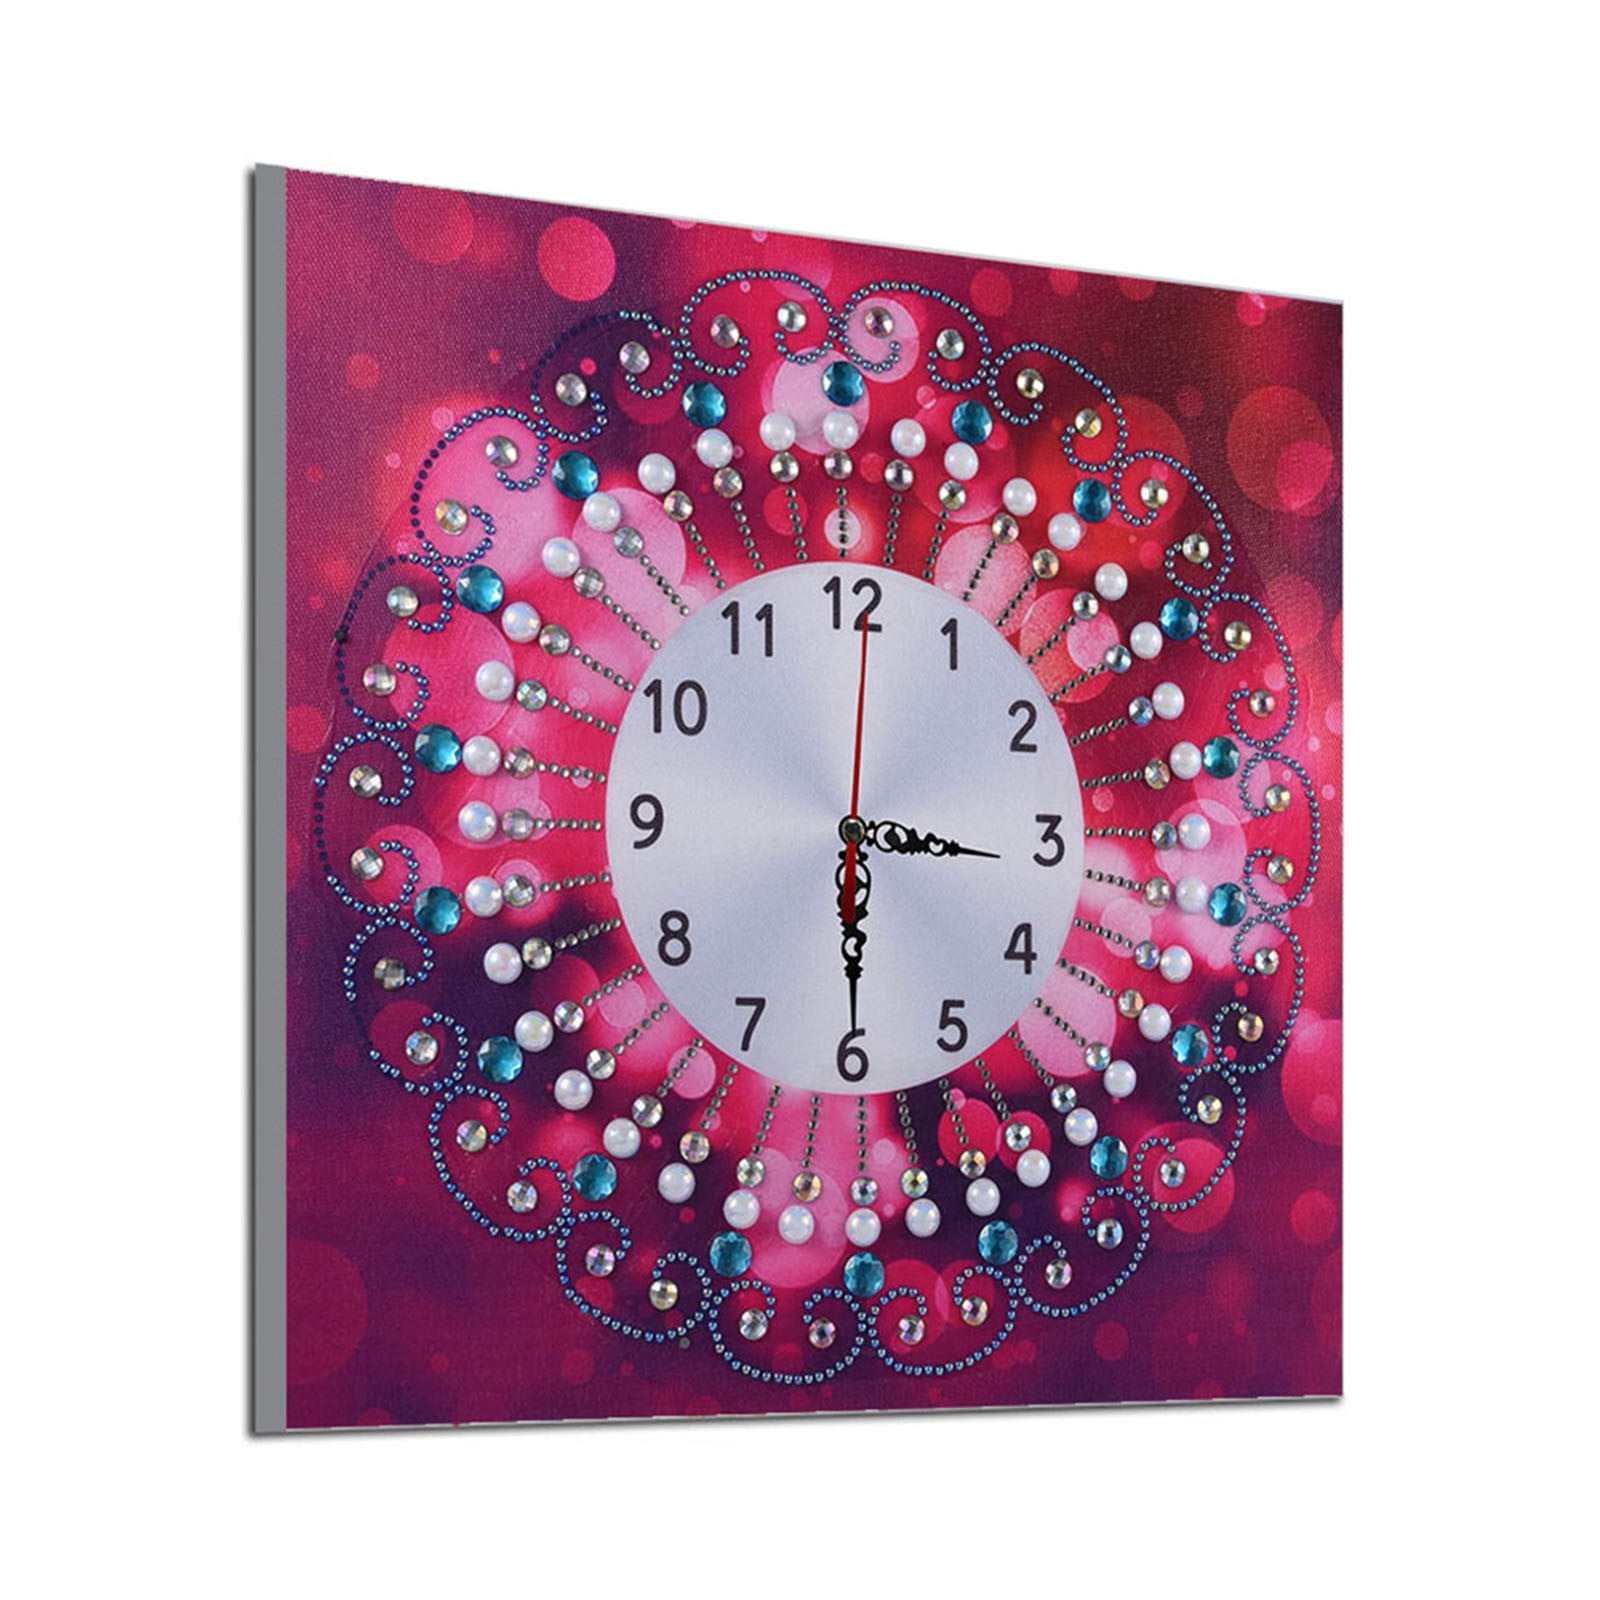 12x12, Rose Glass Clock 5D Diamond Painting Kits Full Drill Diamond Embroidery